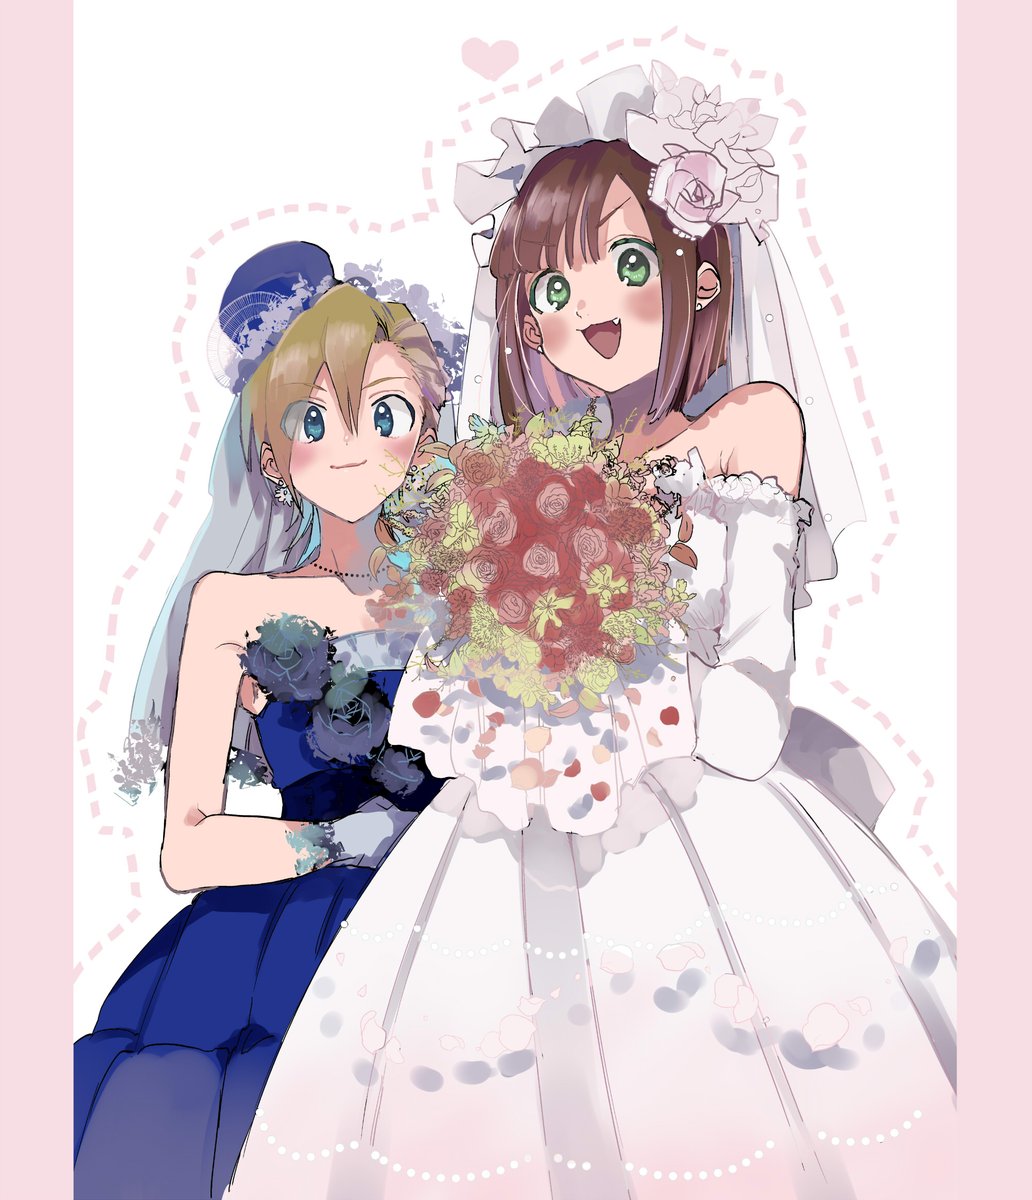 maekawa miku ,tada riina multiple girls 2girls dress bouquet veil wedding dress flower  illustration images